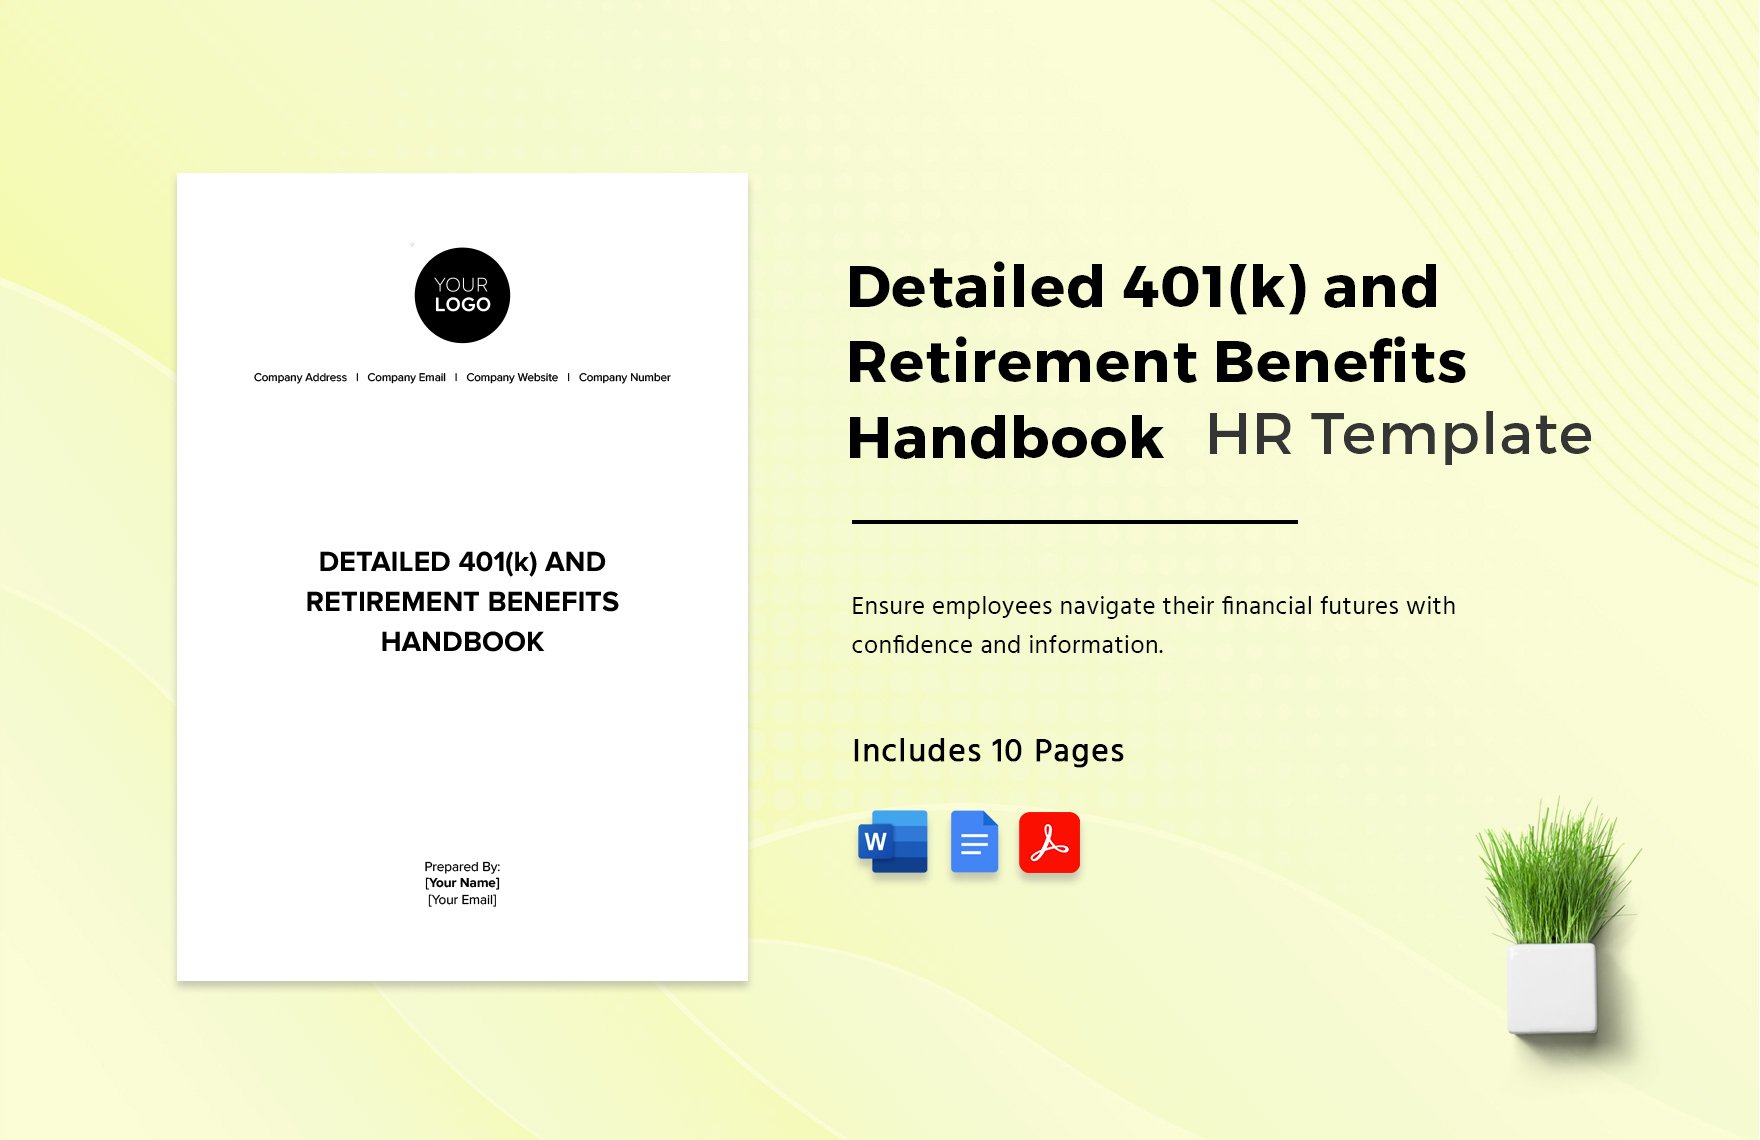 Detailed 401(k) and Retirement Benefits Handbook HR Template